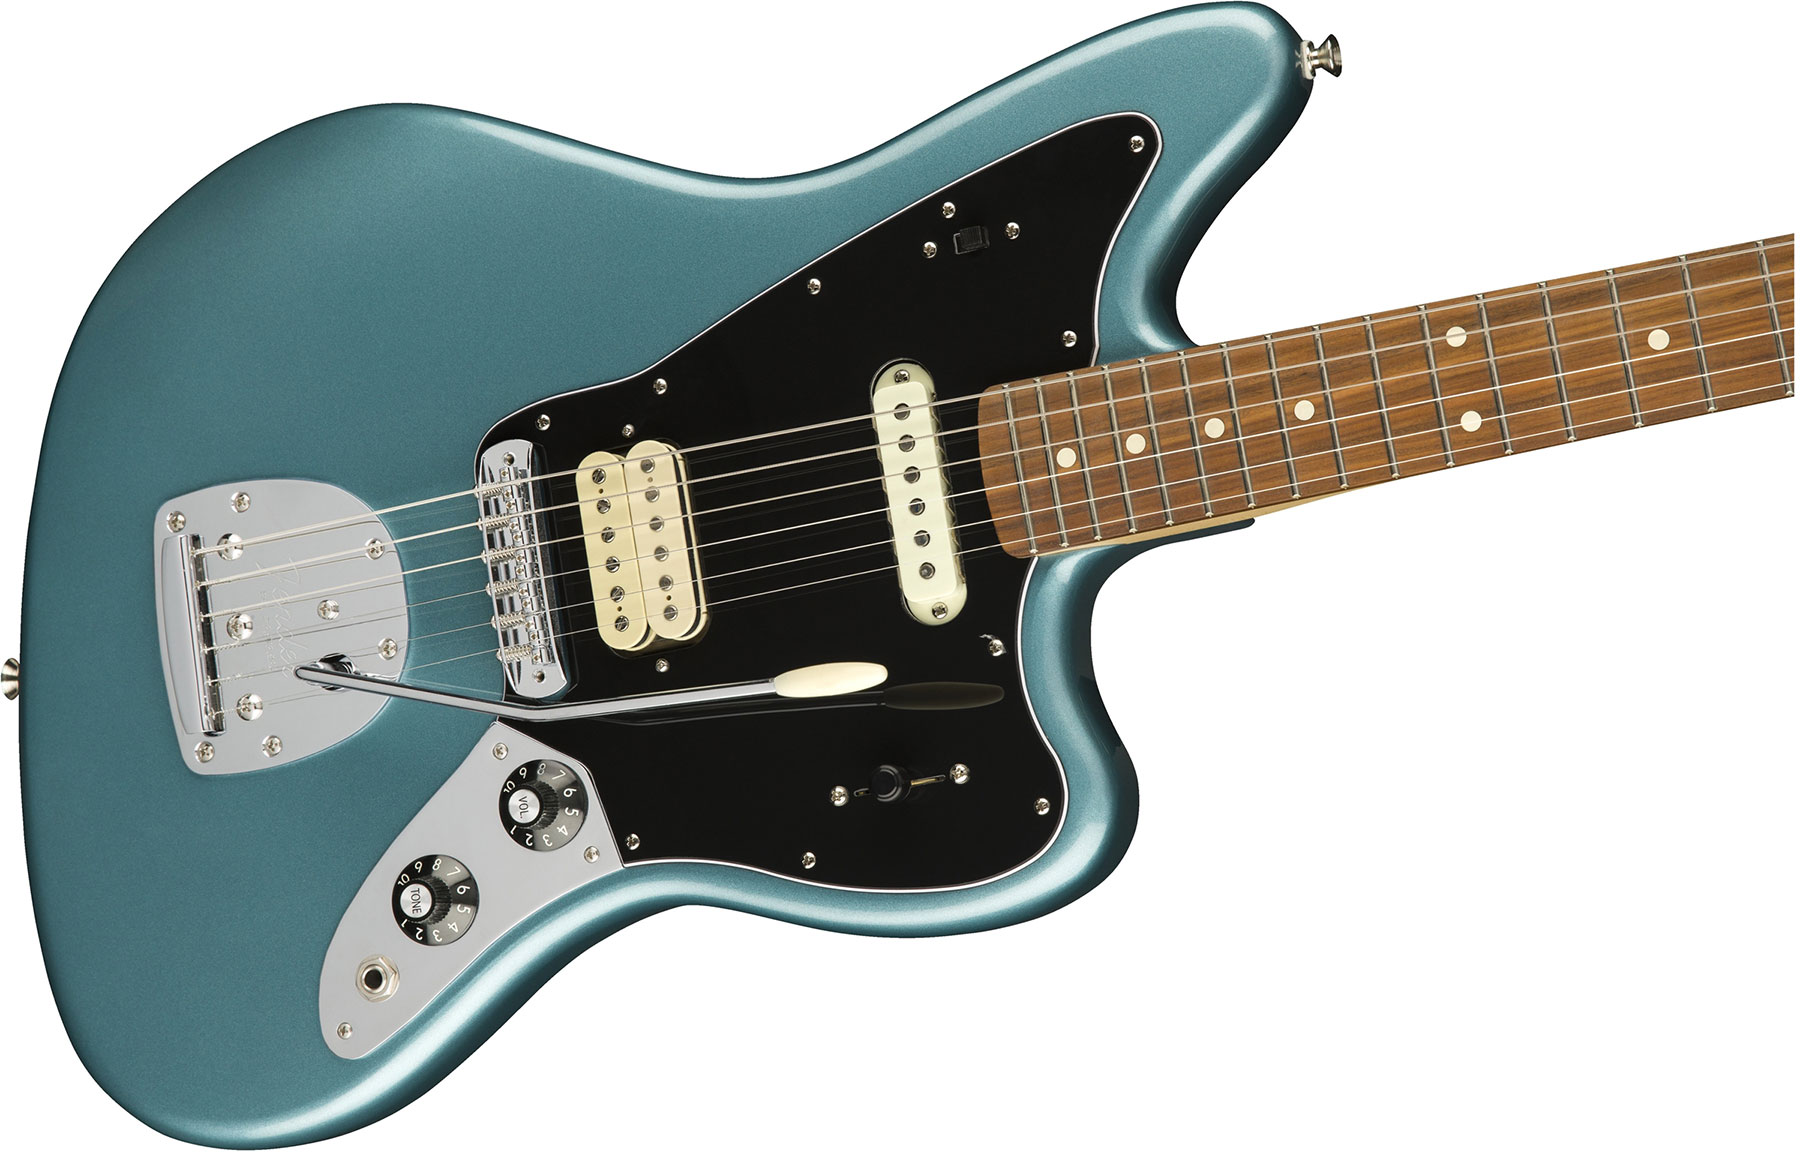 Fender Jaguar Player Mex Hs Trem Pf - Tidepool - Guitarra electrica retro rock - Variation 2